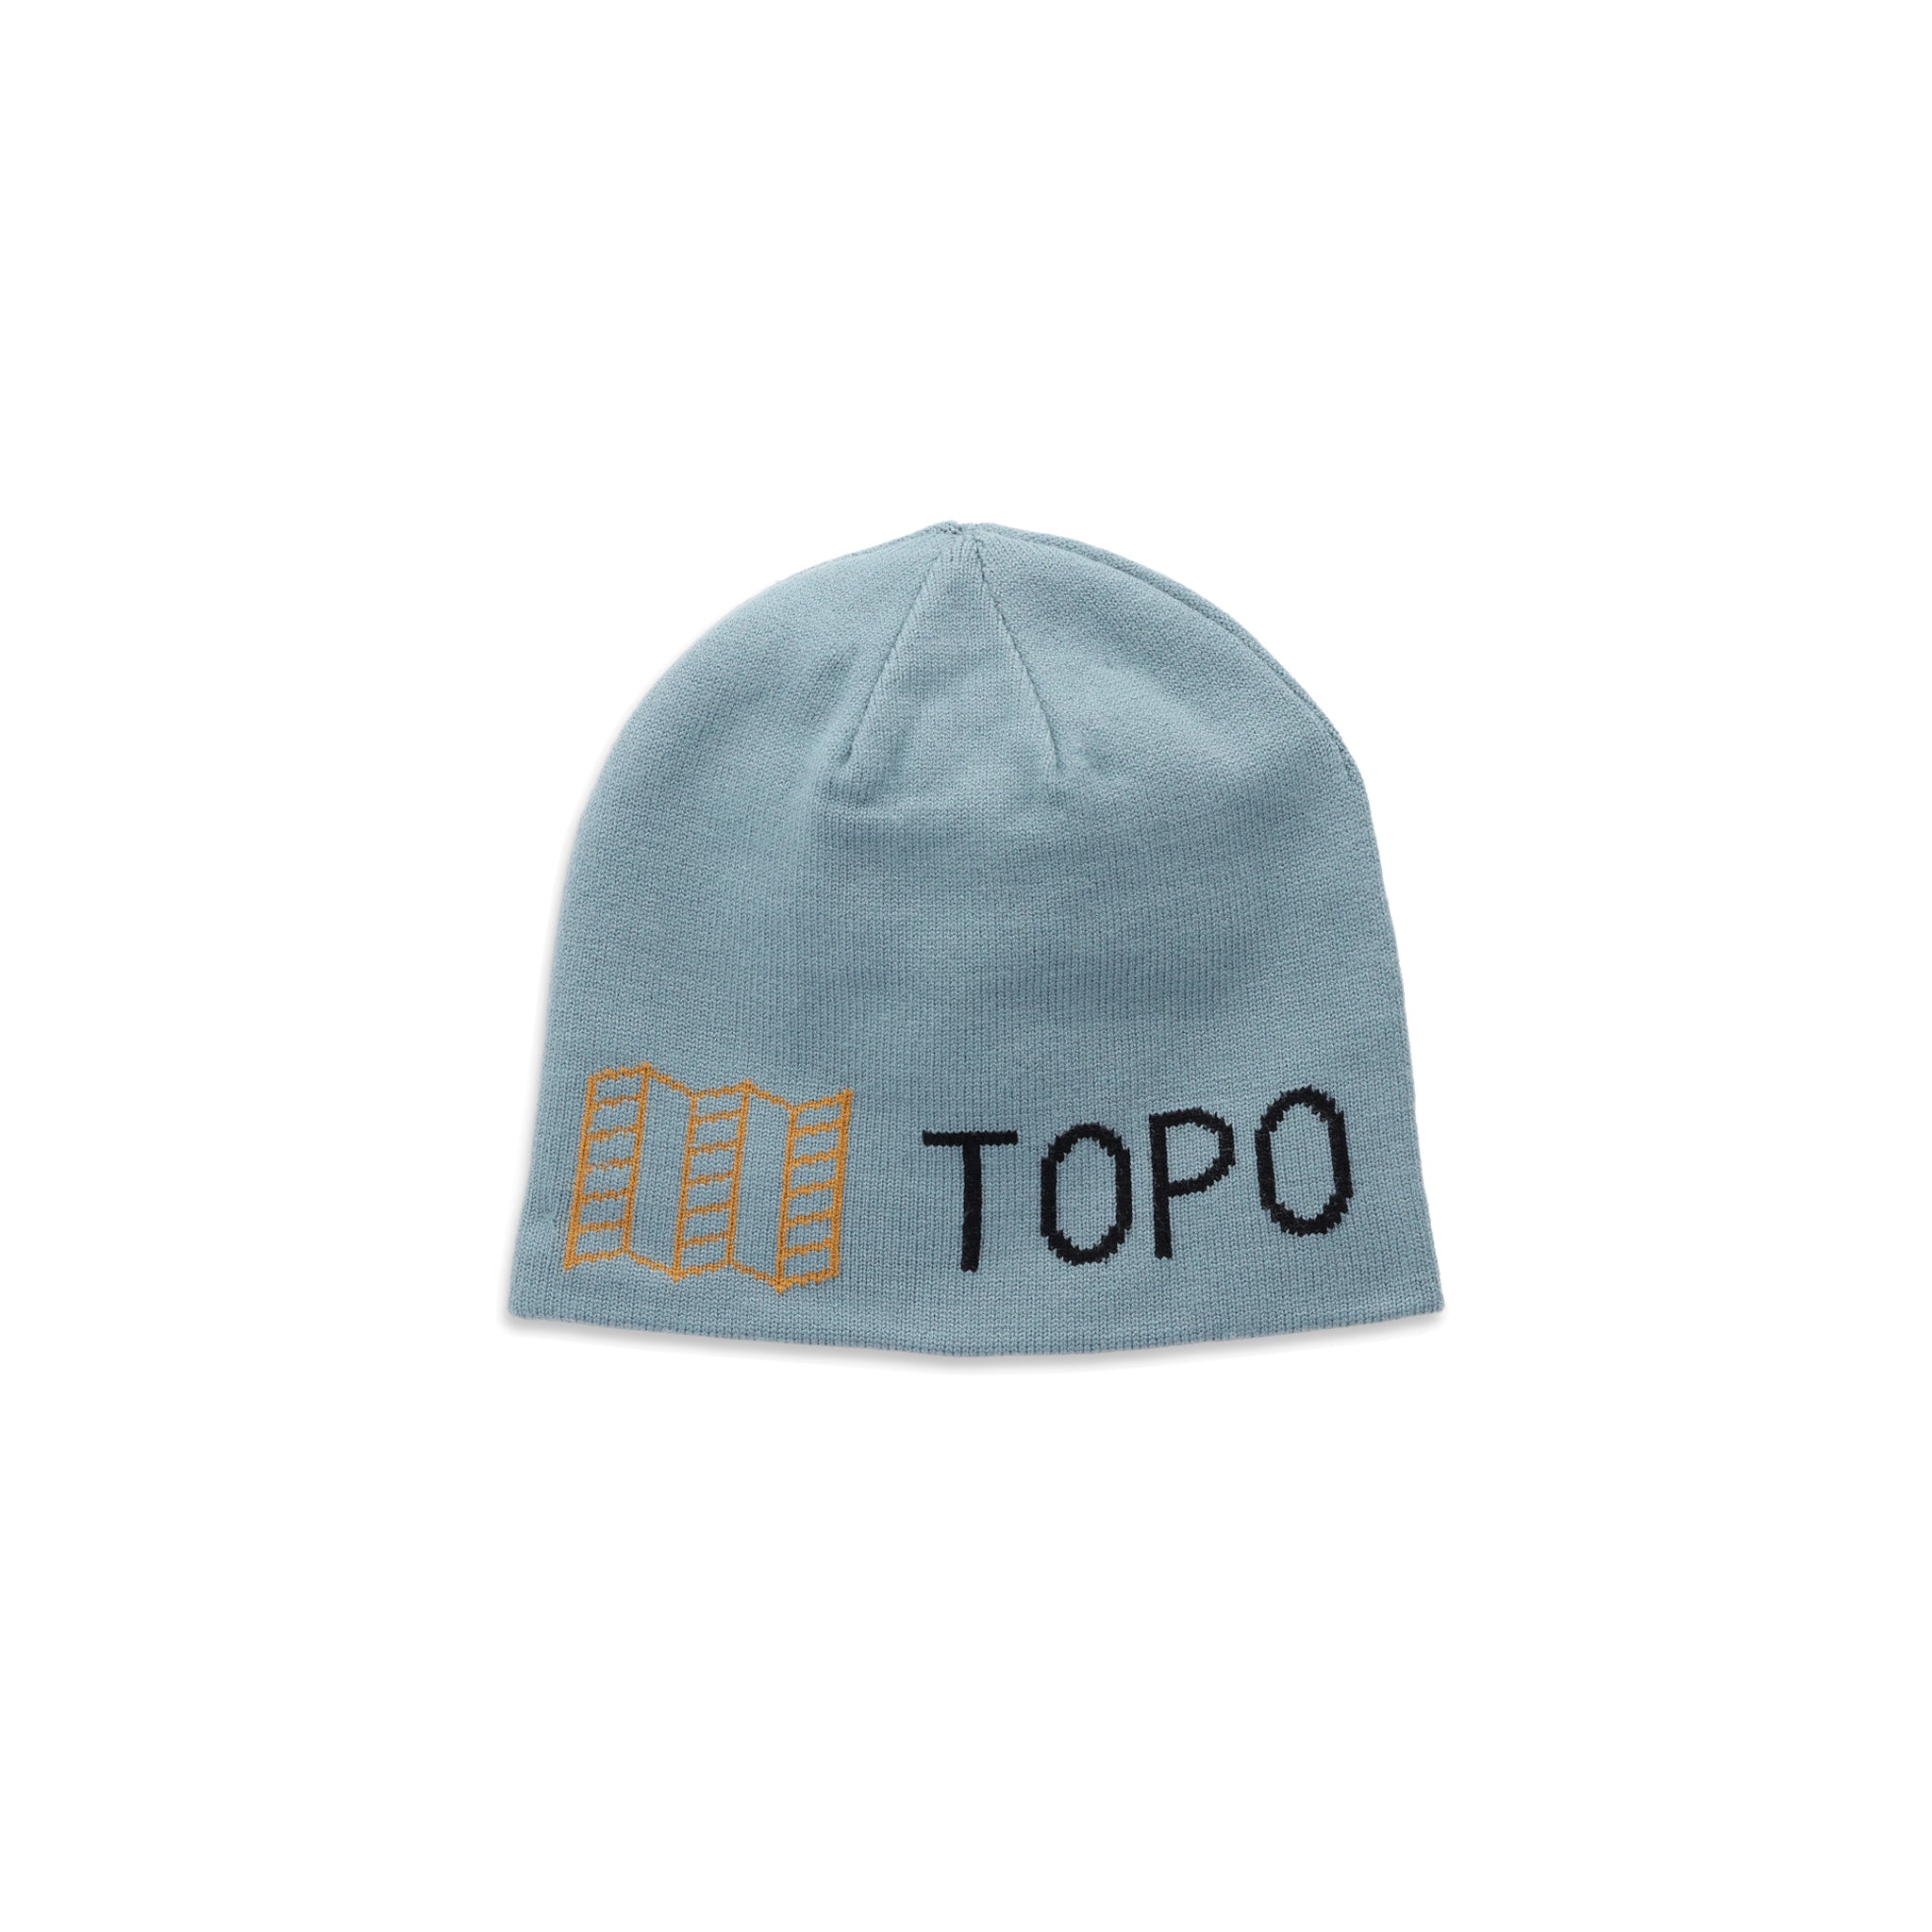 Topo Designs Slim Fitted Beanie "Sand / Goblin Blue"